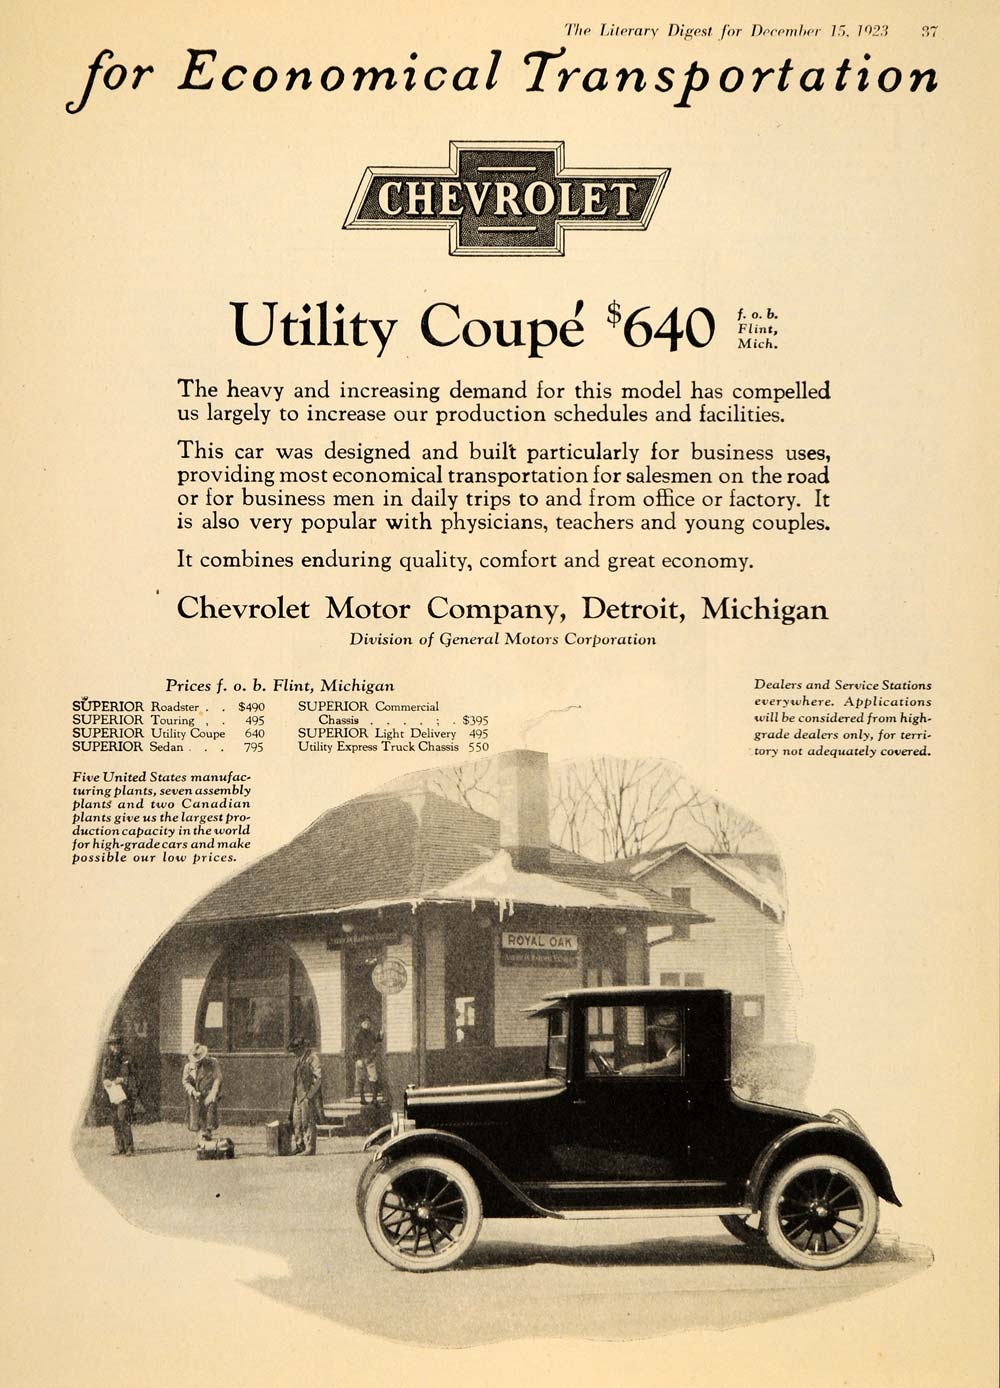 1923 Ad Vintage Chevrolet Utility Coupe Antique Car - ORIGINAL ADVERTISING LD1